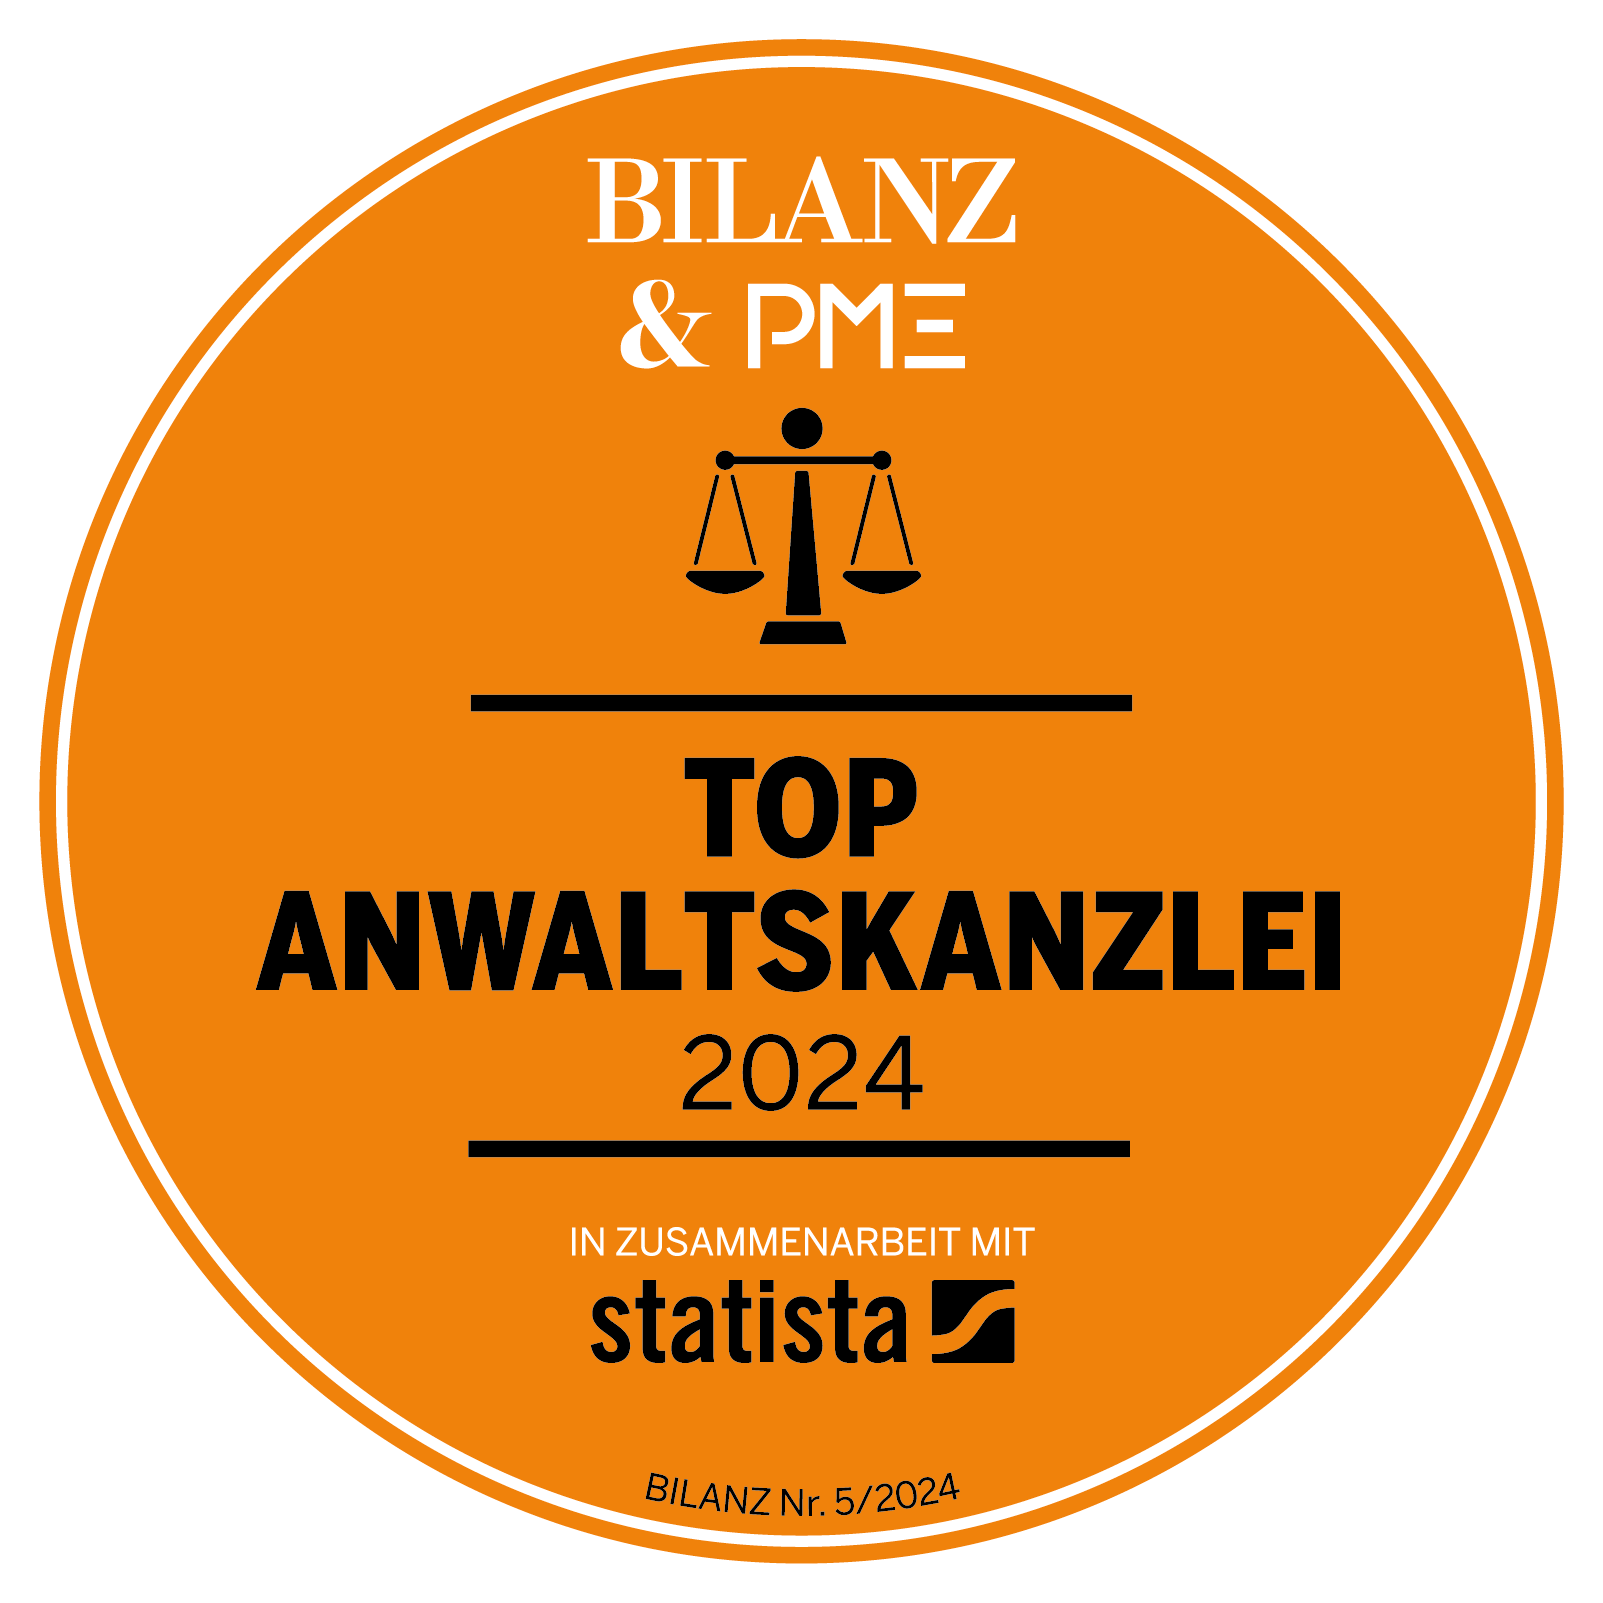 Bilanz Top Anwaltskanslei 2020